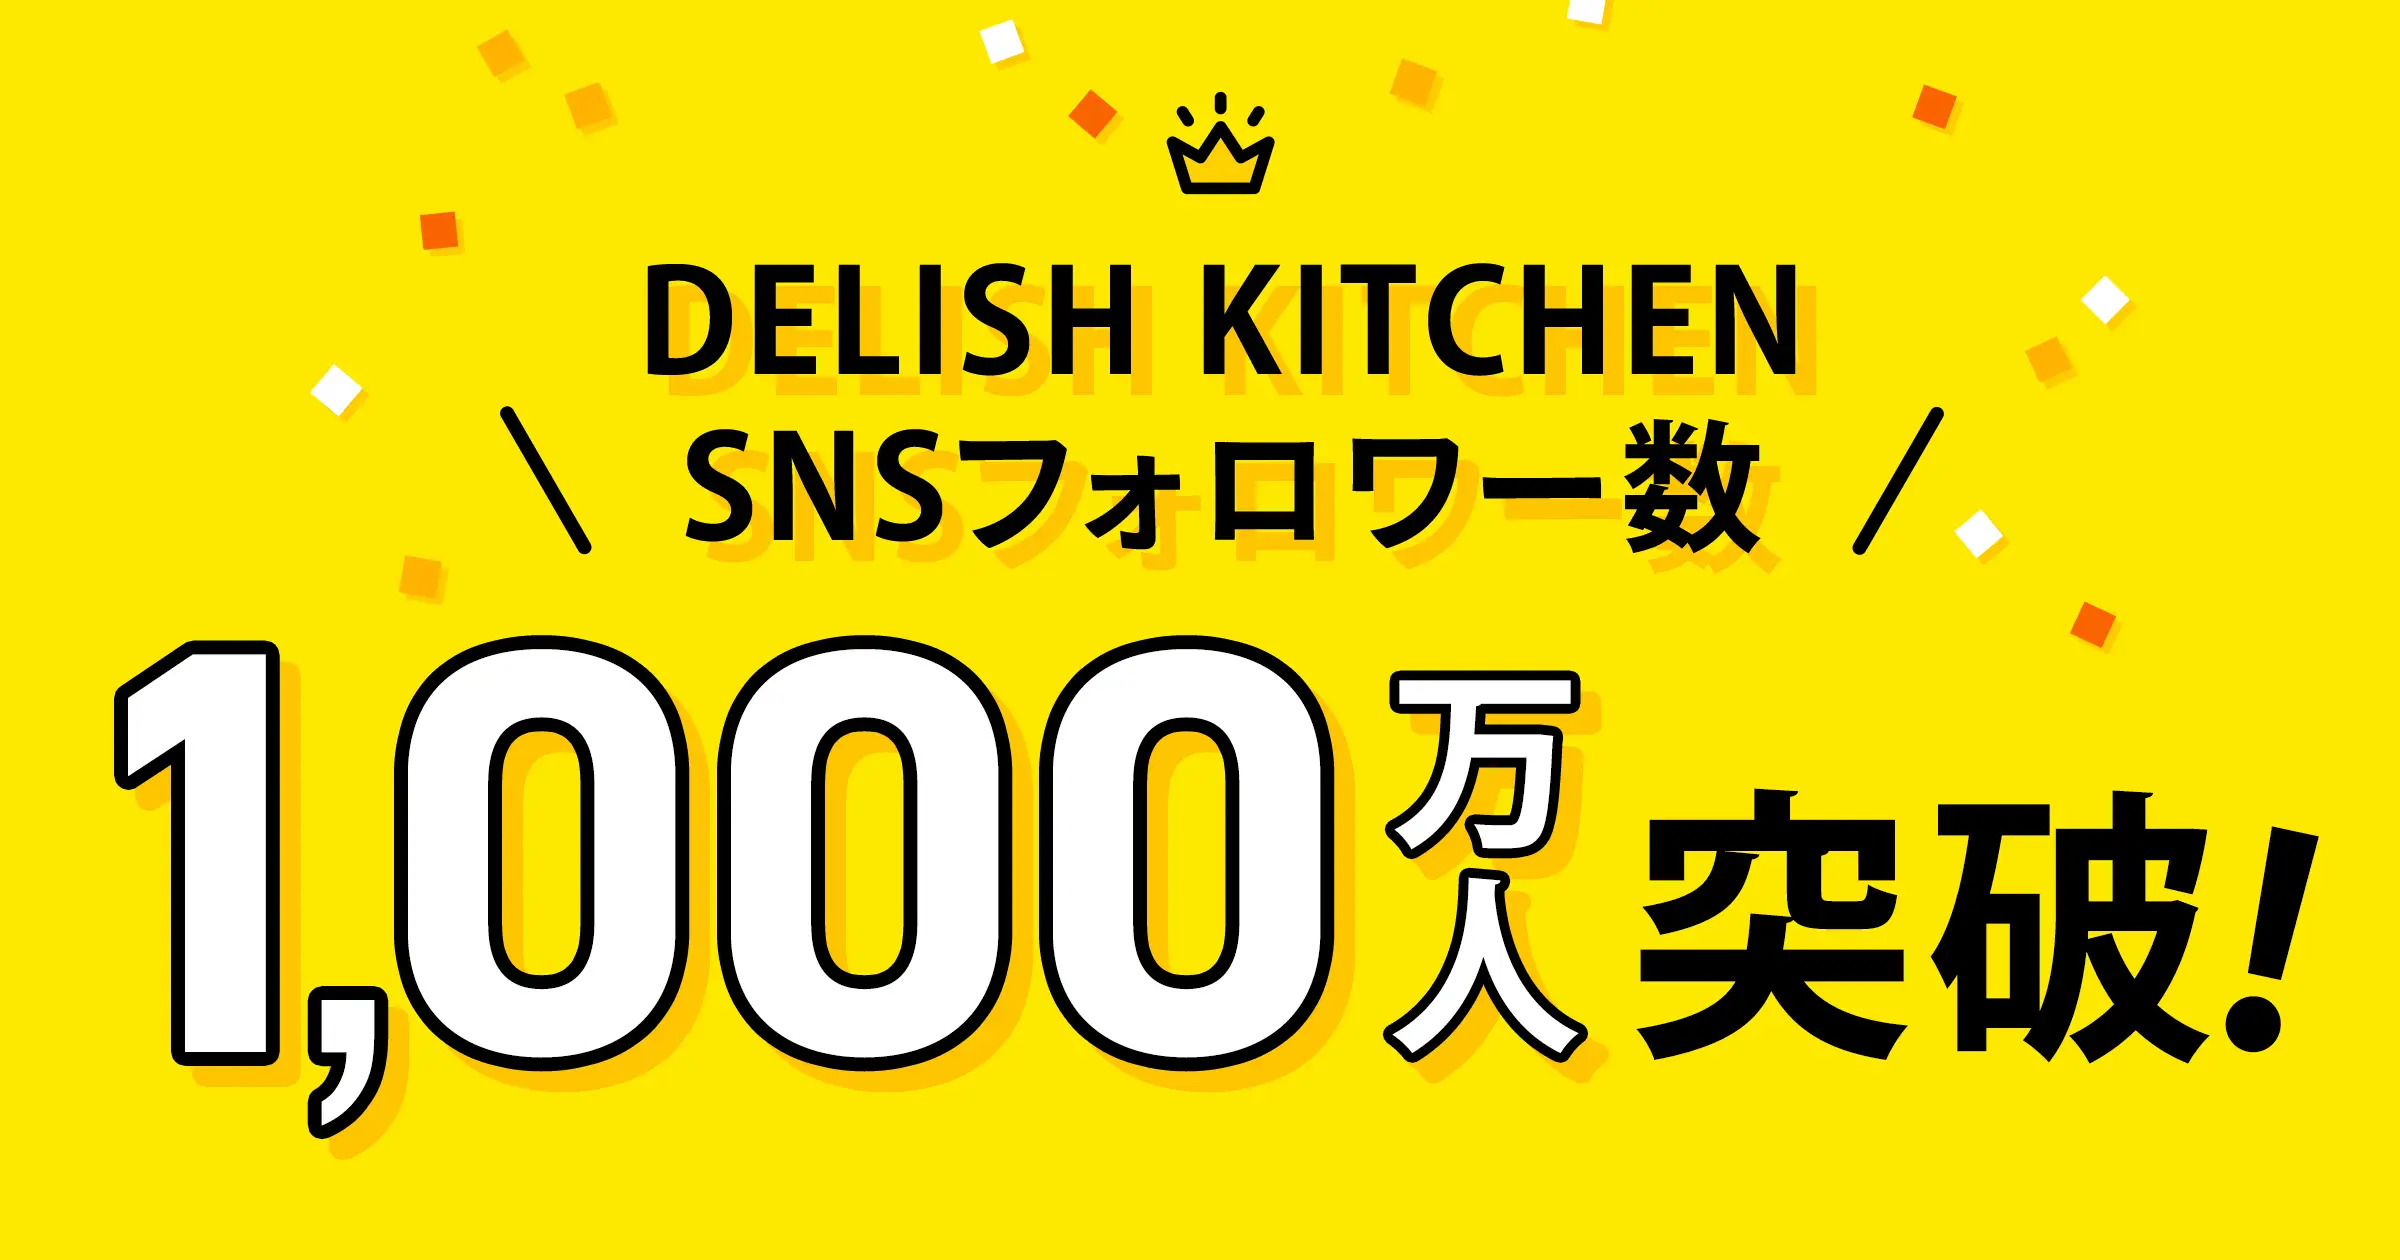 『DELISH KITCHEN』、SNS7媒体の合計フォロワー数が1,000万人を突破！